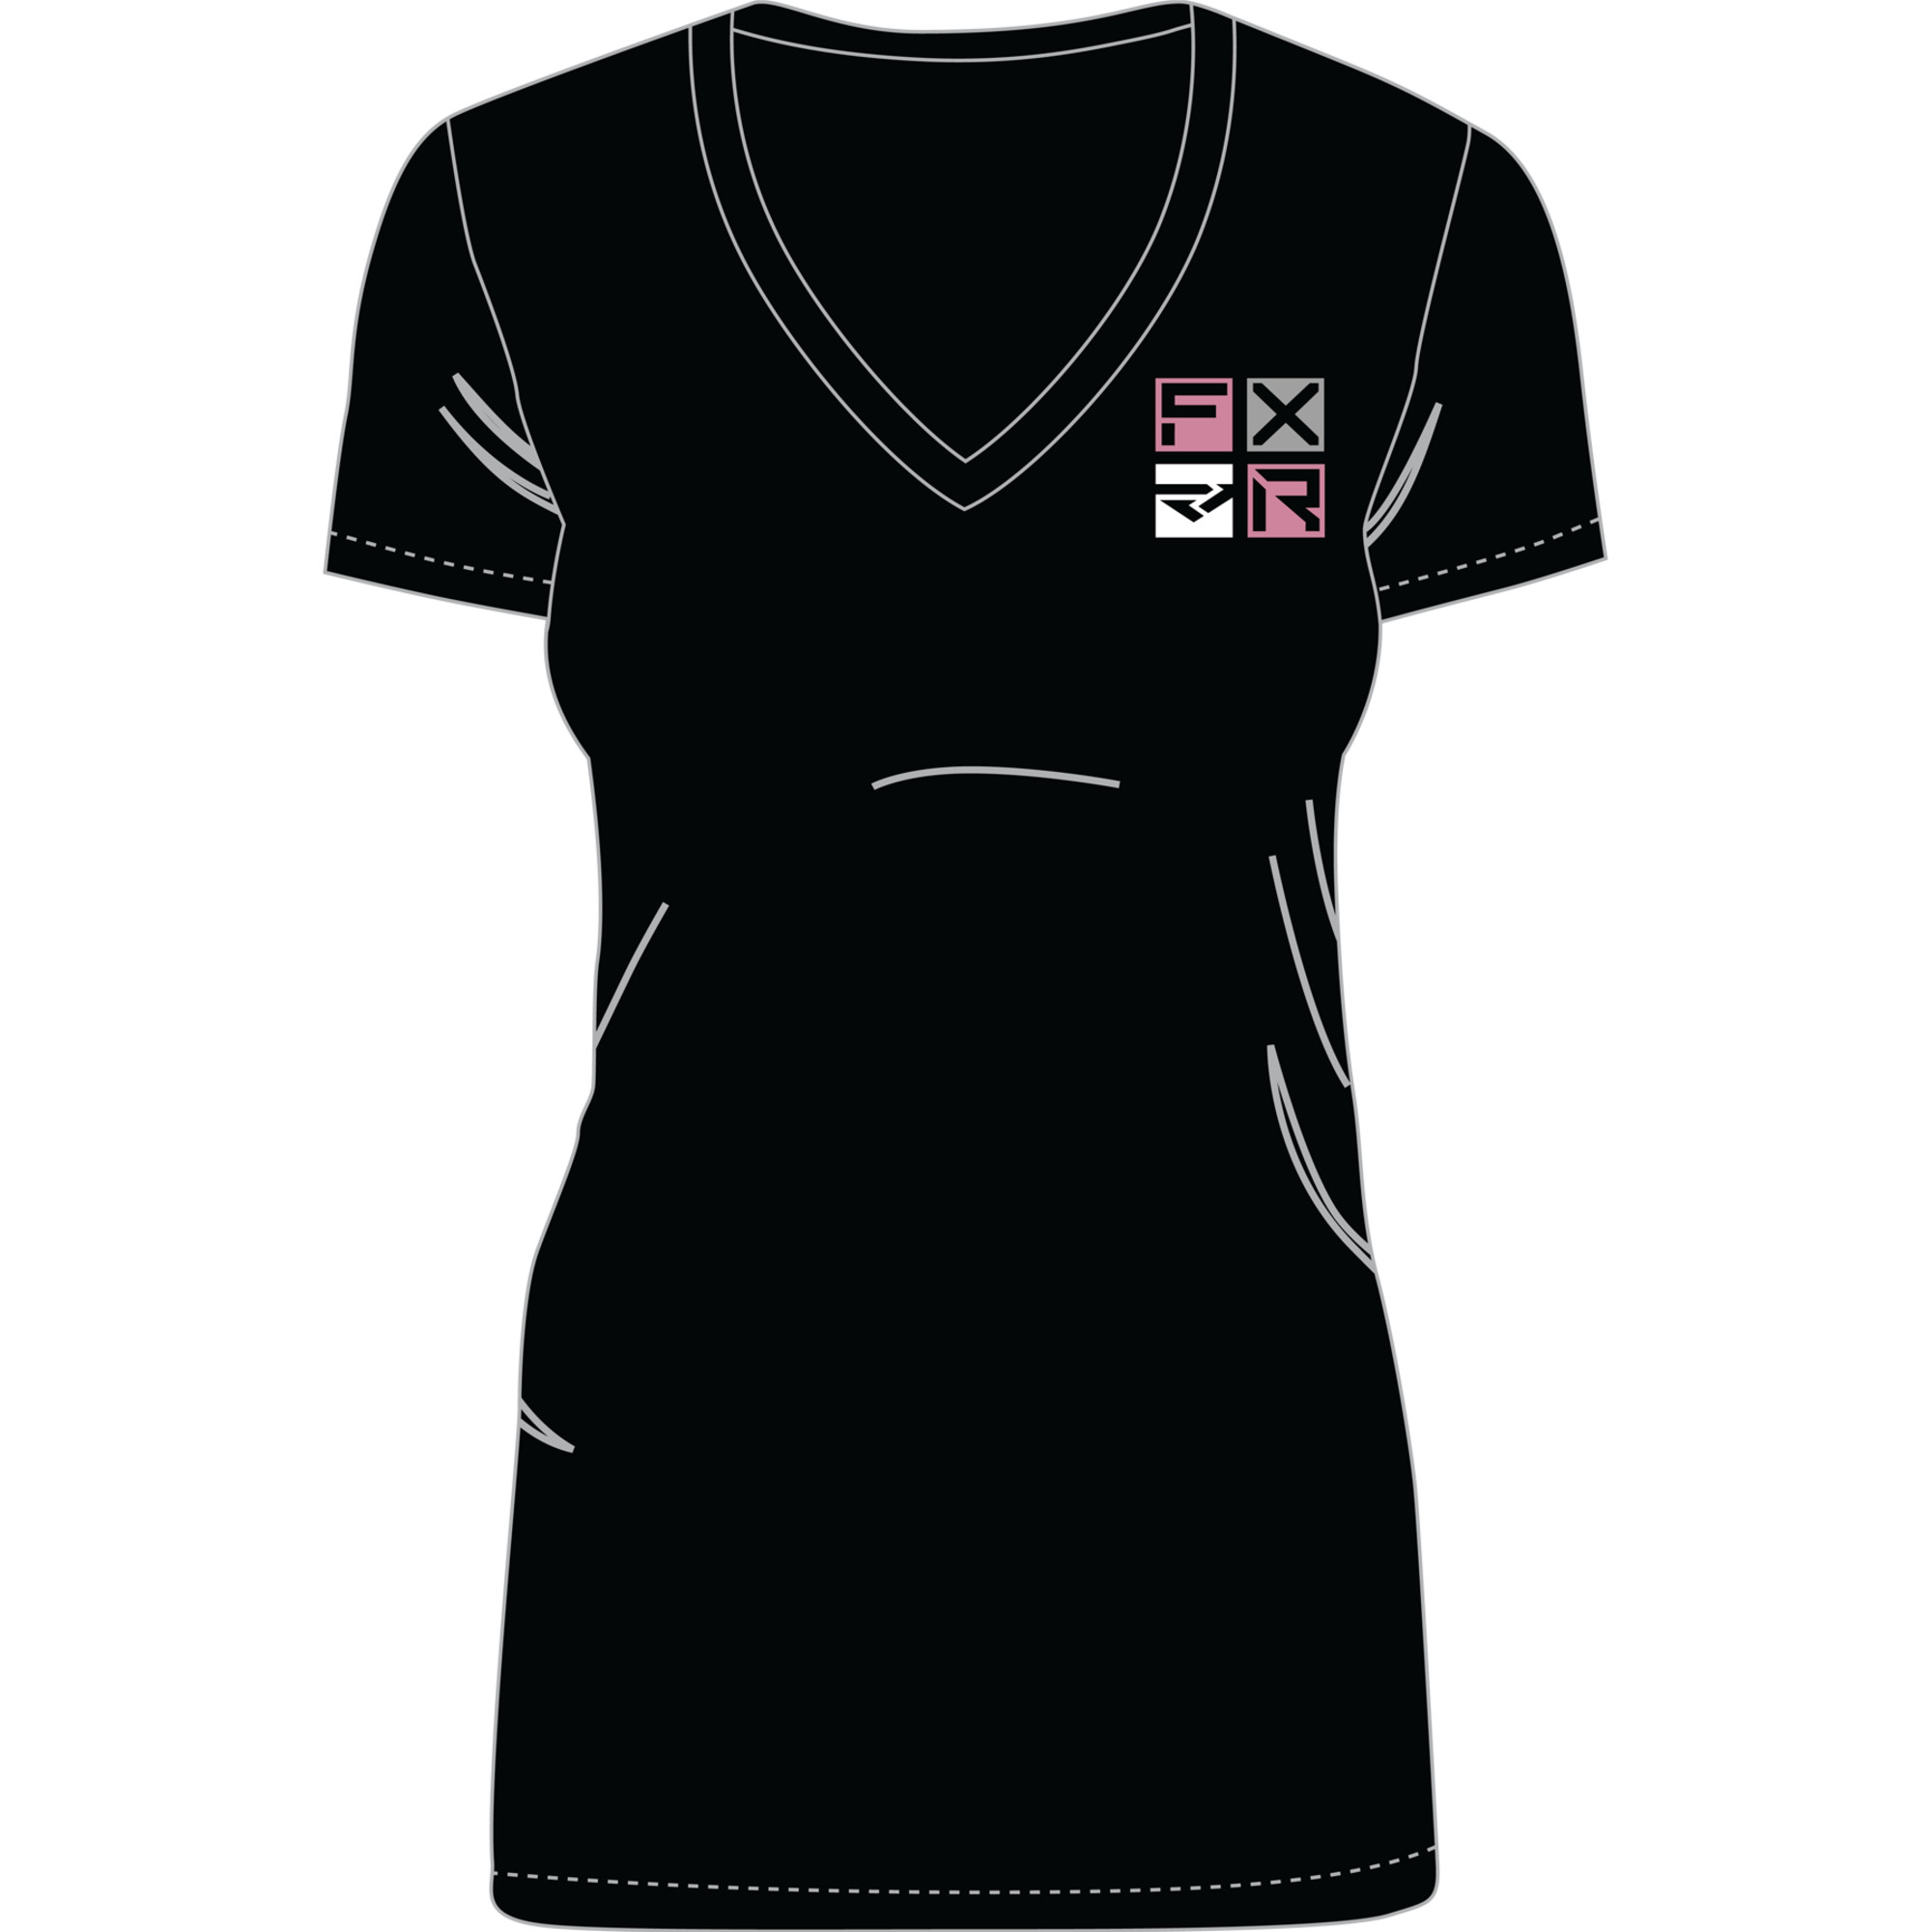 fxr racing t-shirt shirts for womens ride x v neck